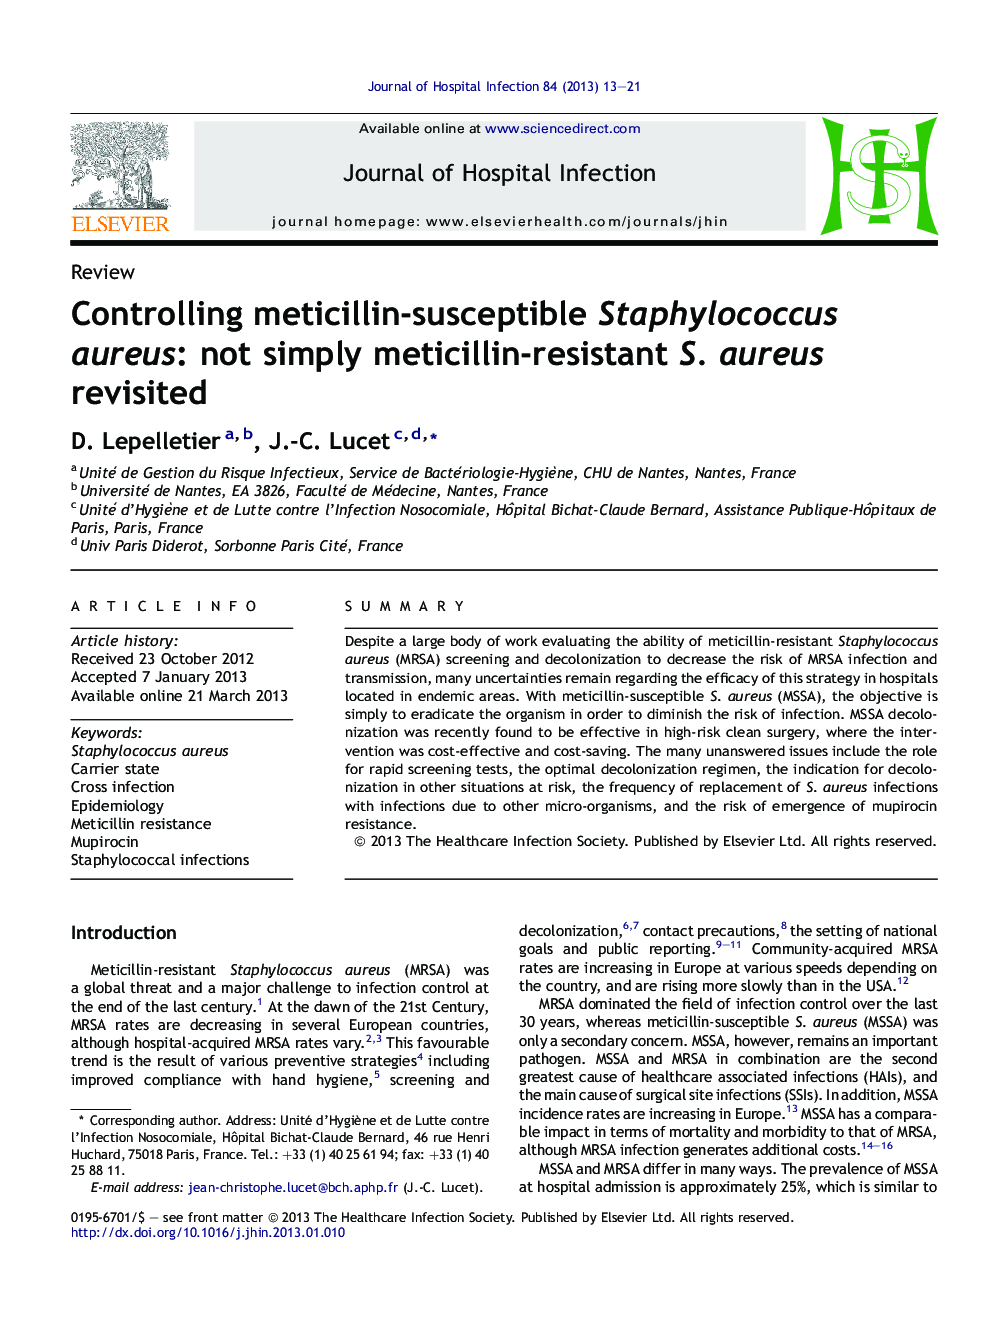 Controlling meticillin-susceptible Staphylococcus aureus: not simply meticillin-resistant S. aureus revisited